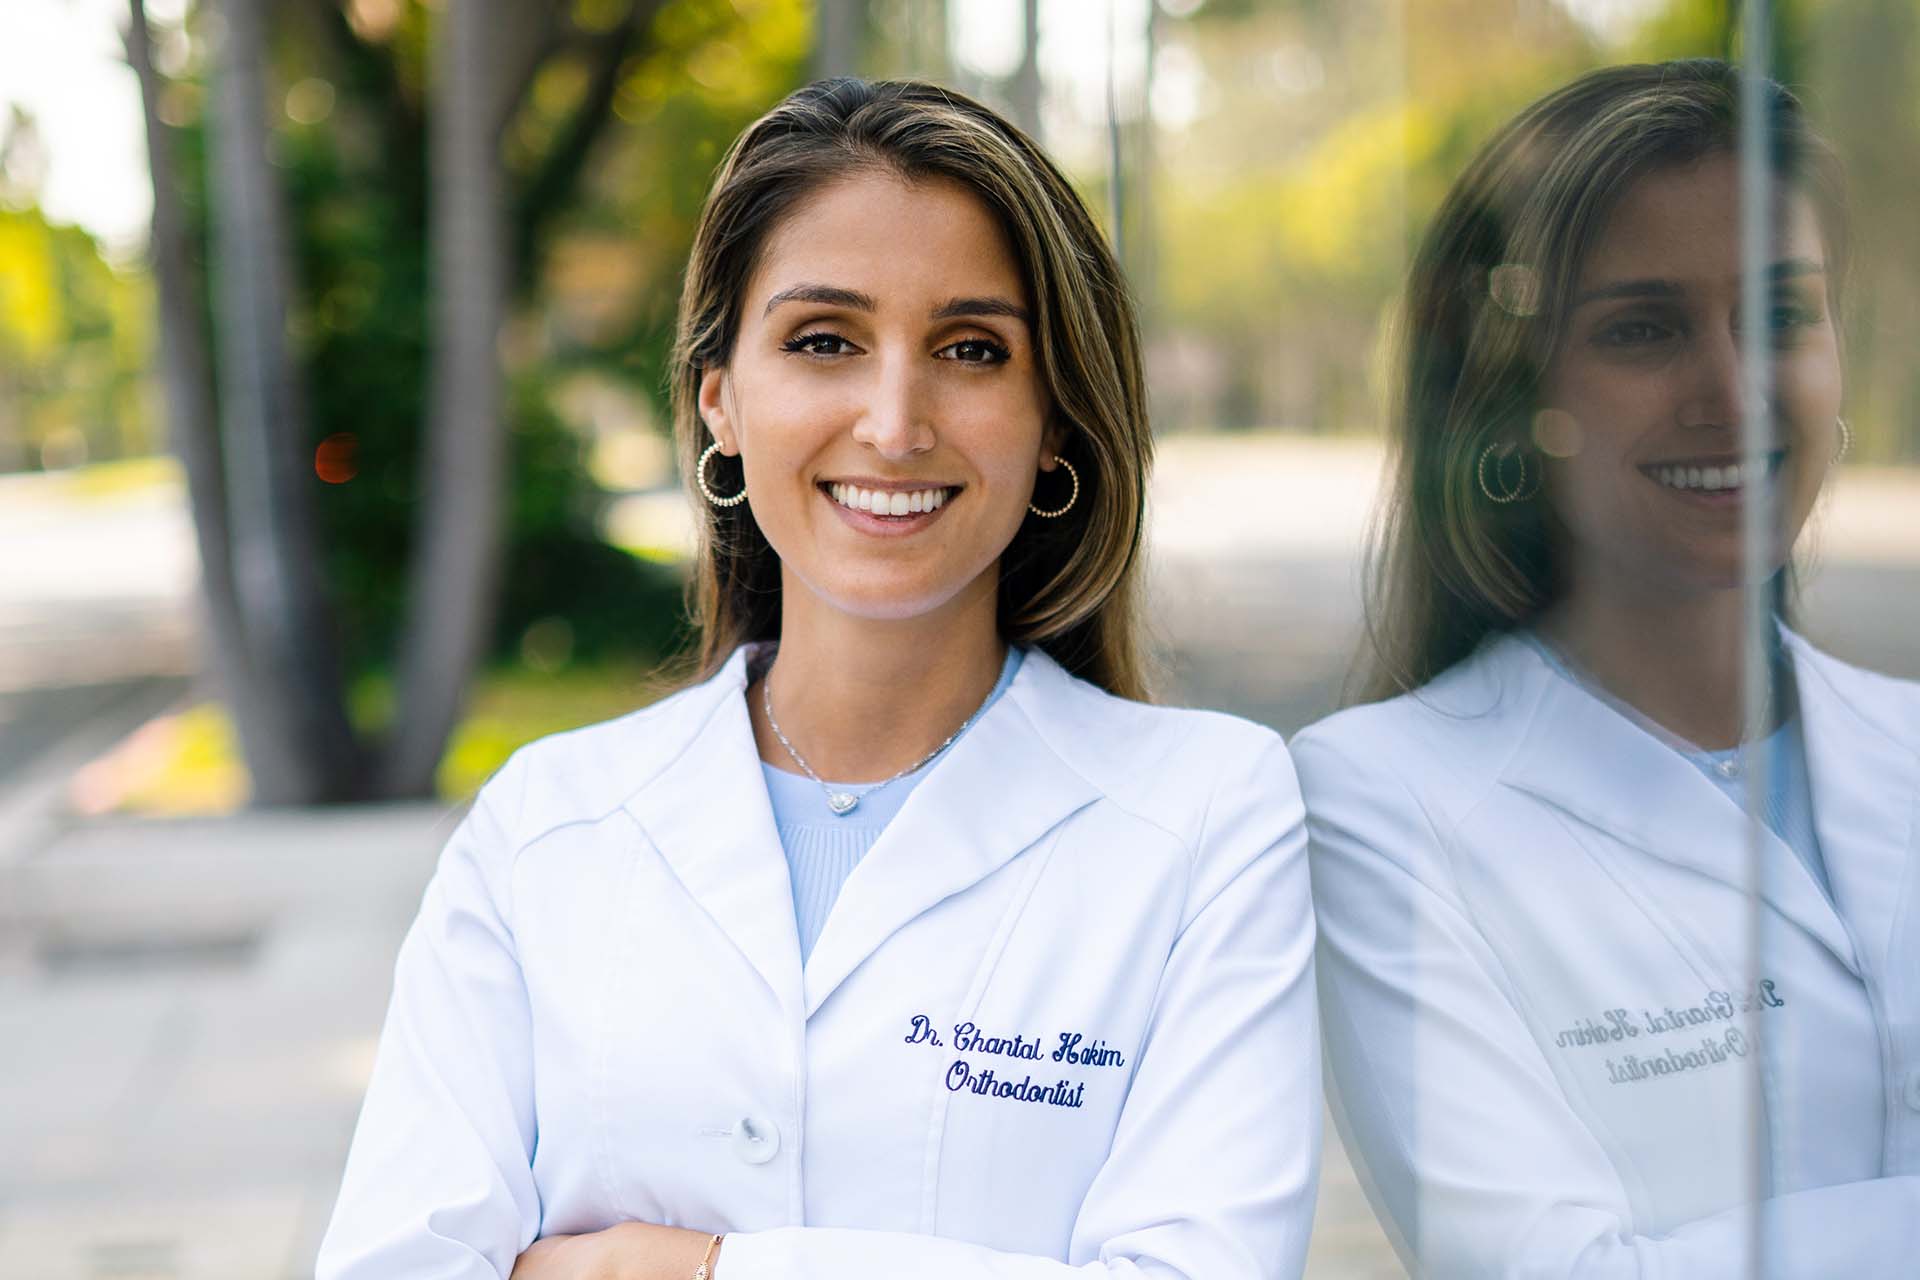 Dr Chantal Hakim of the Orthospaceship - Hakim Orthodontics serving Beverly Grove, Los Angeles